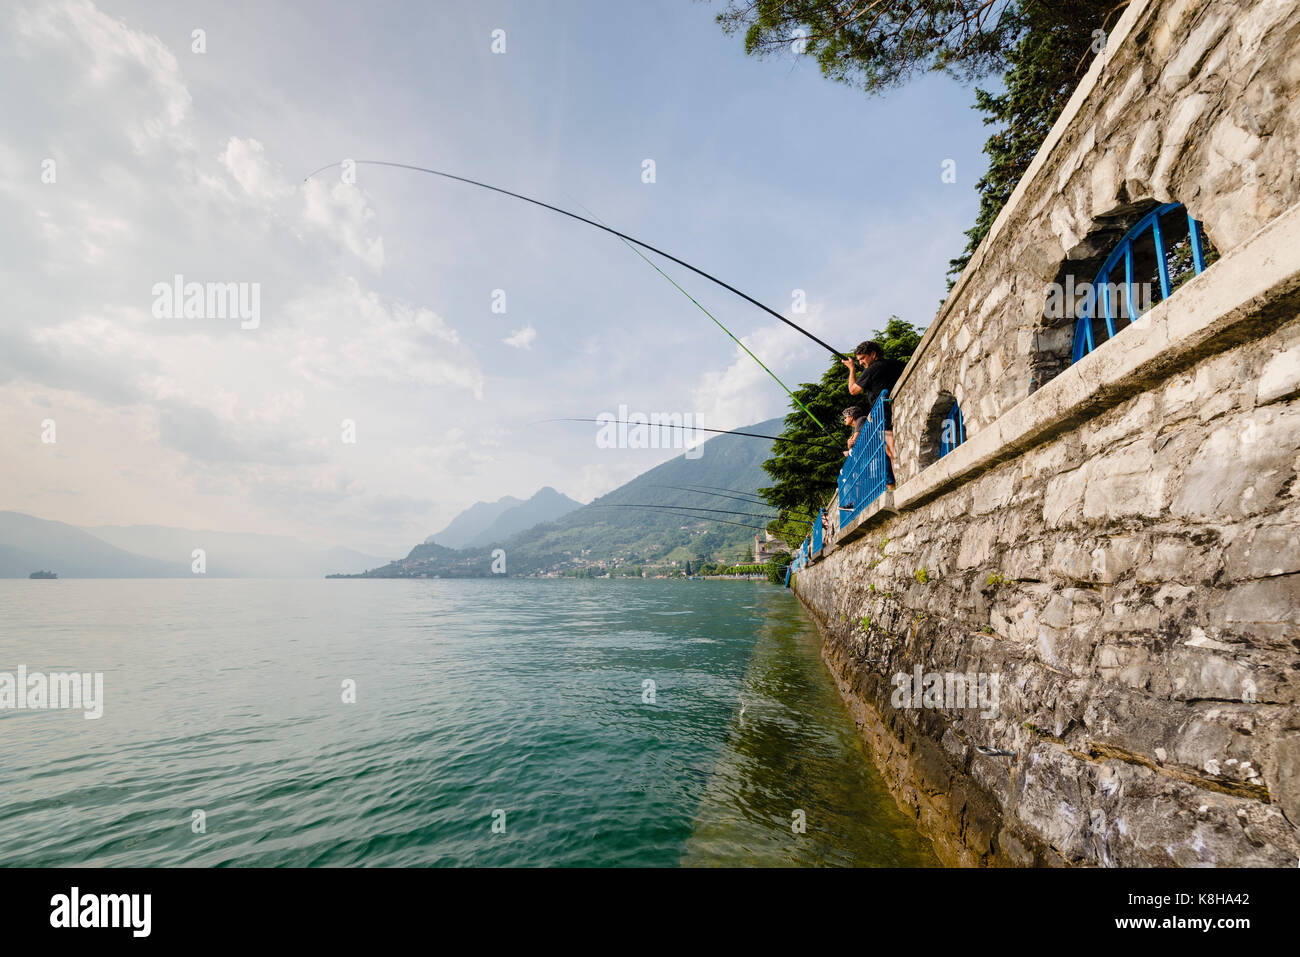 Il pescatore mit langen angelruten an der Mauer der seepromenade von vendita marasinao am iseosee, lombardei, italien Foto Stock